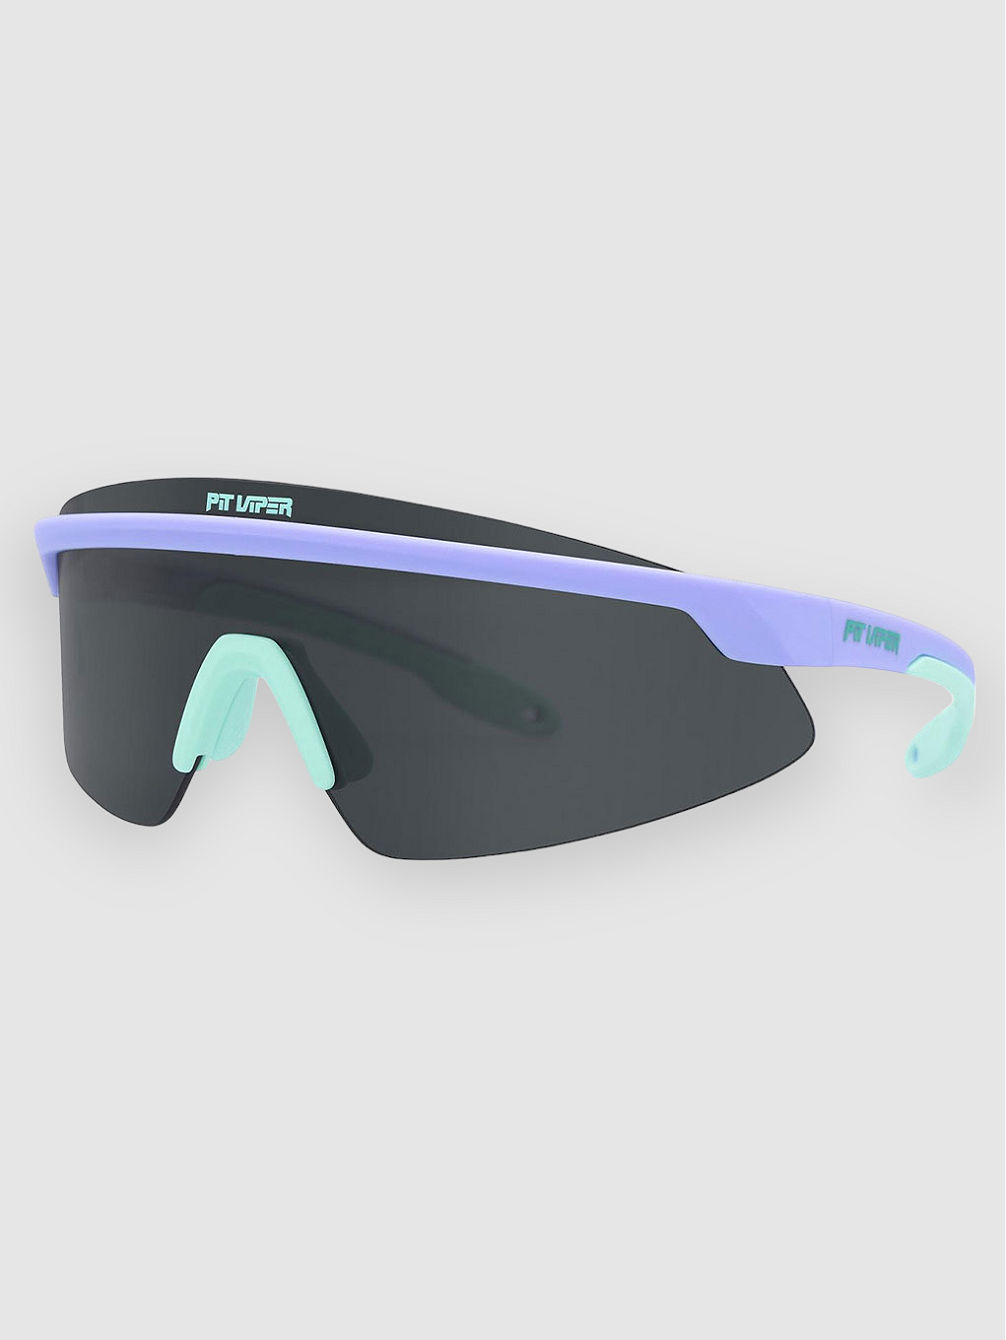 The Skysurfer Polarized Sunglasses